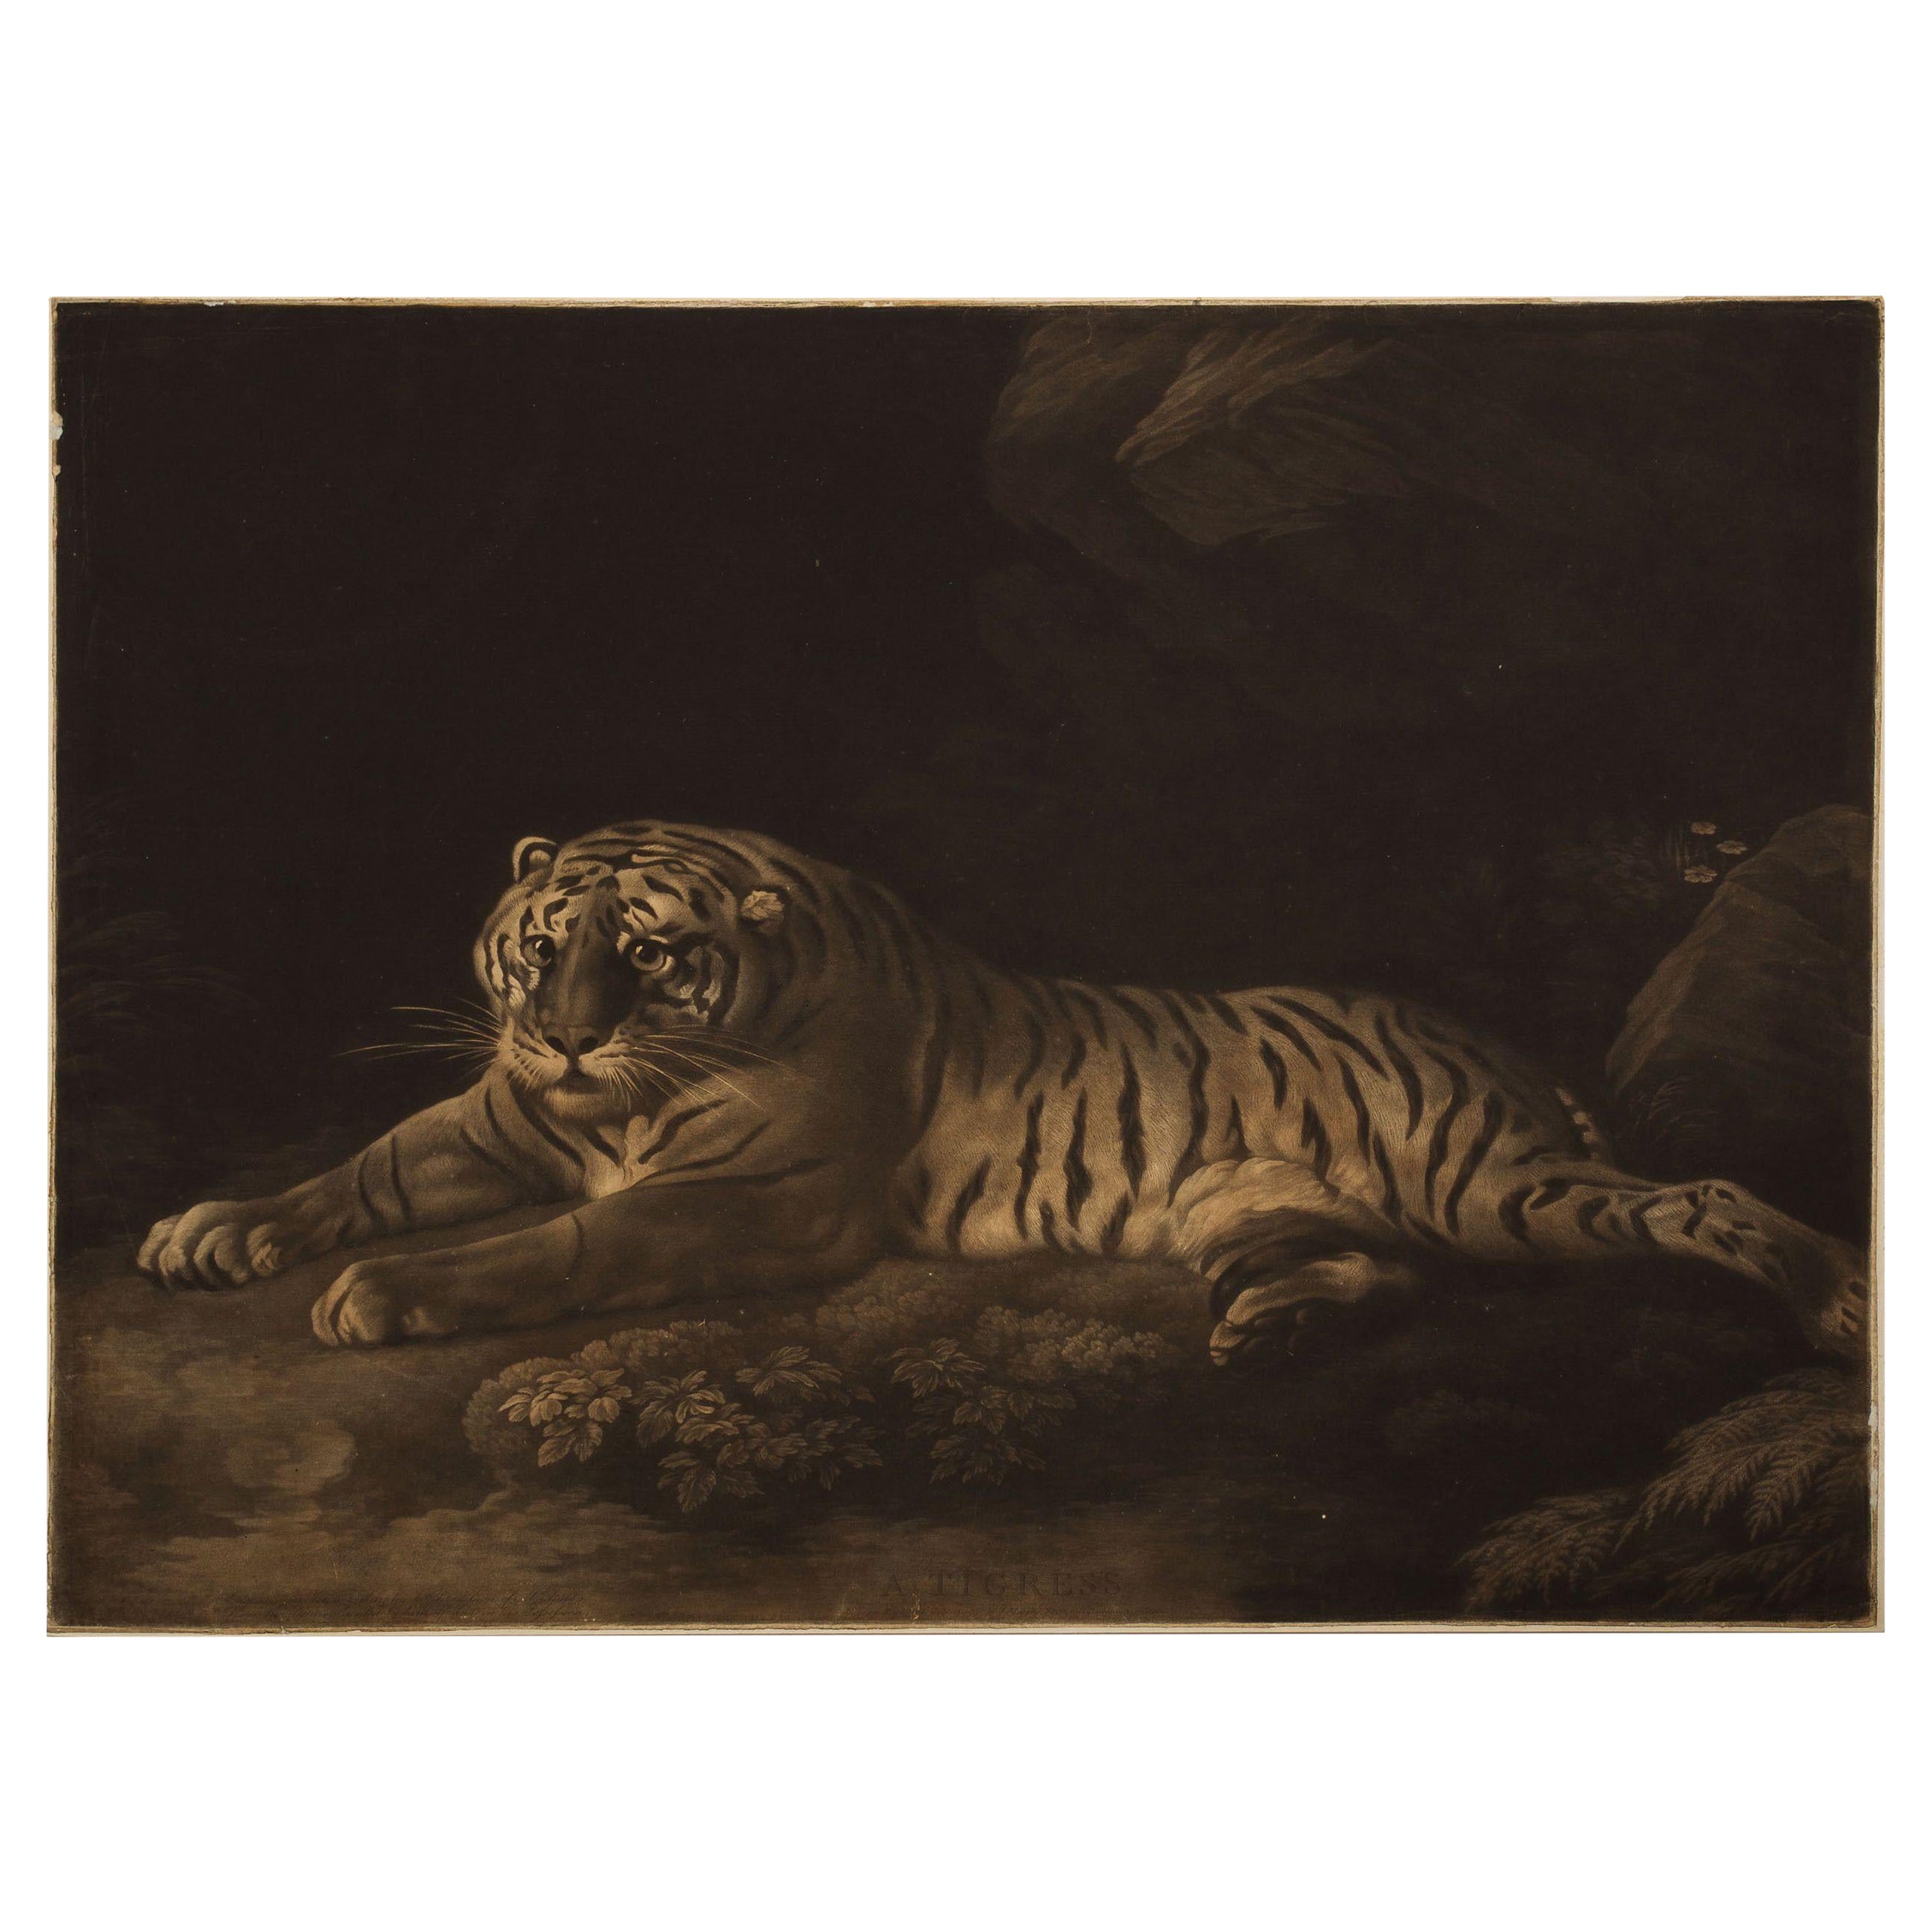 Rare Mezzotint Engraving "a Tigress" by John Murphy After George Stubbs, c.1798